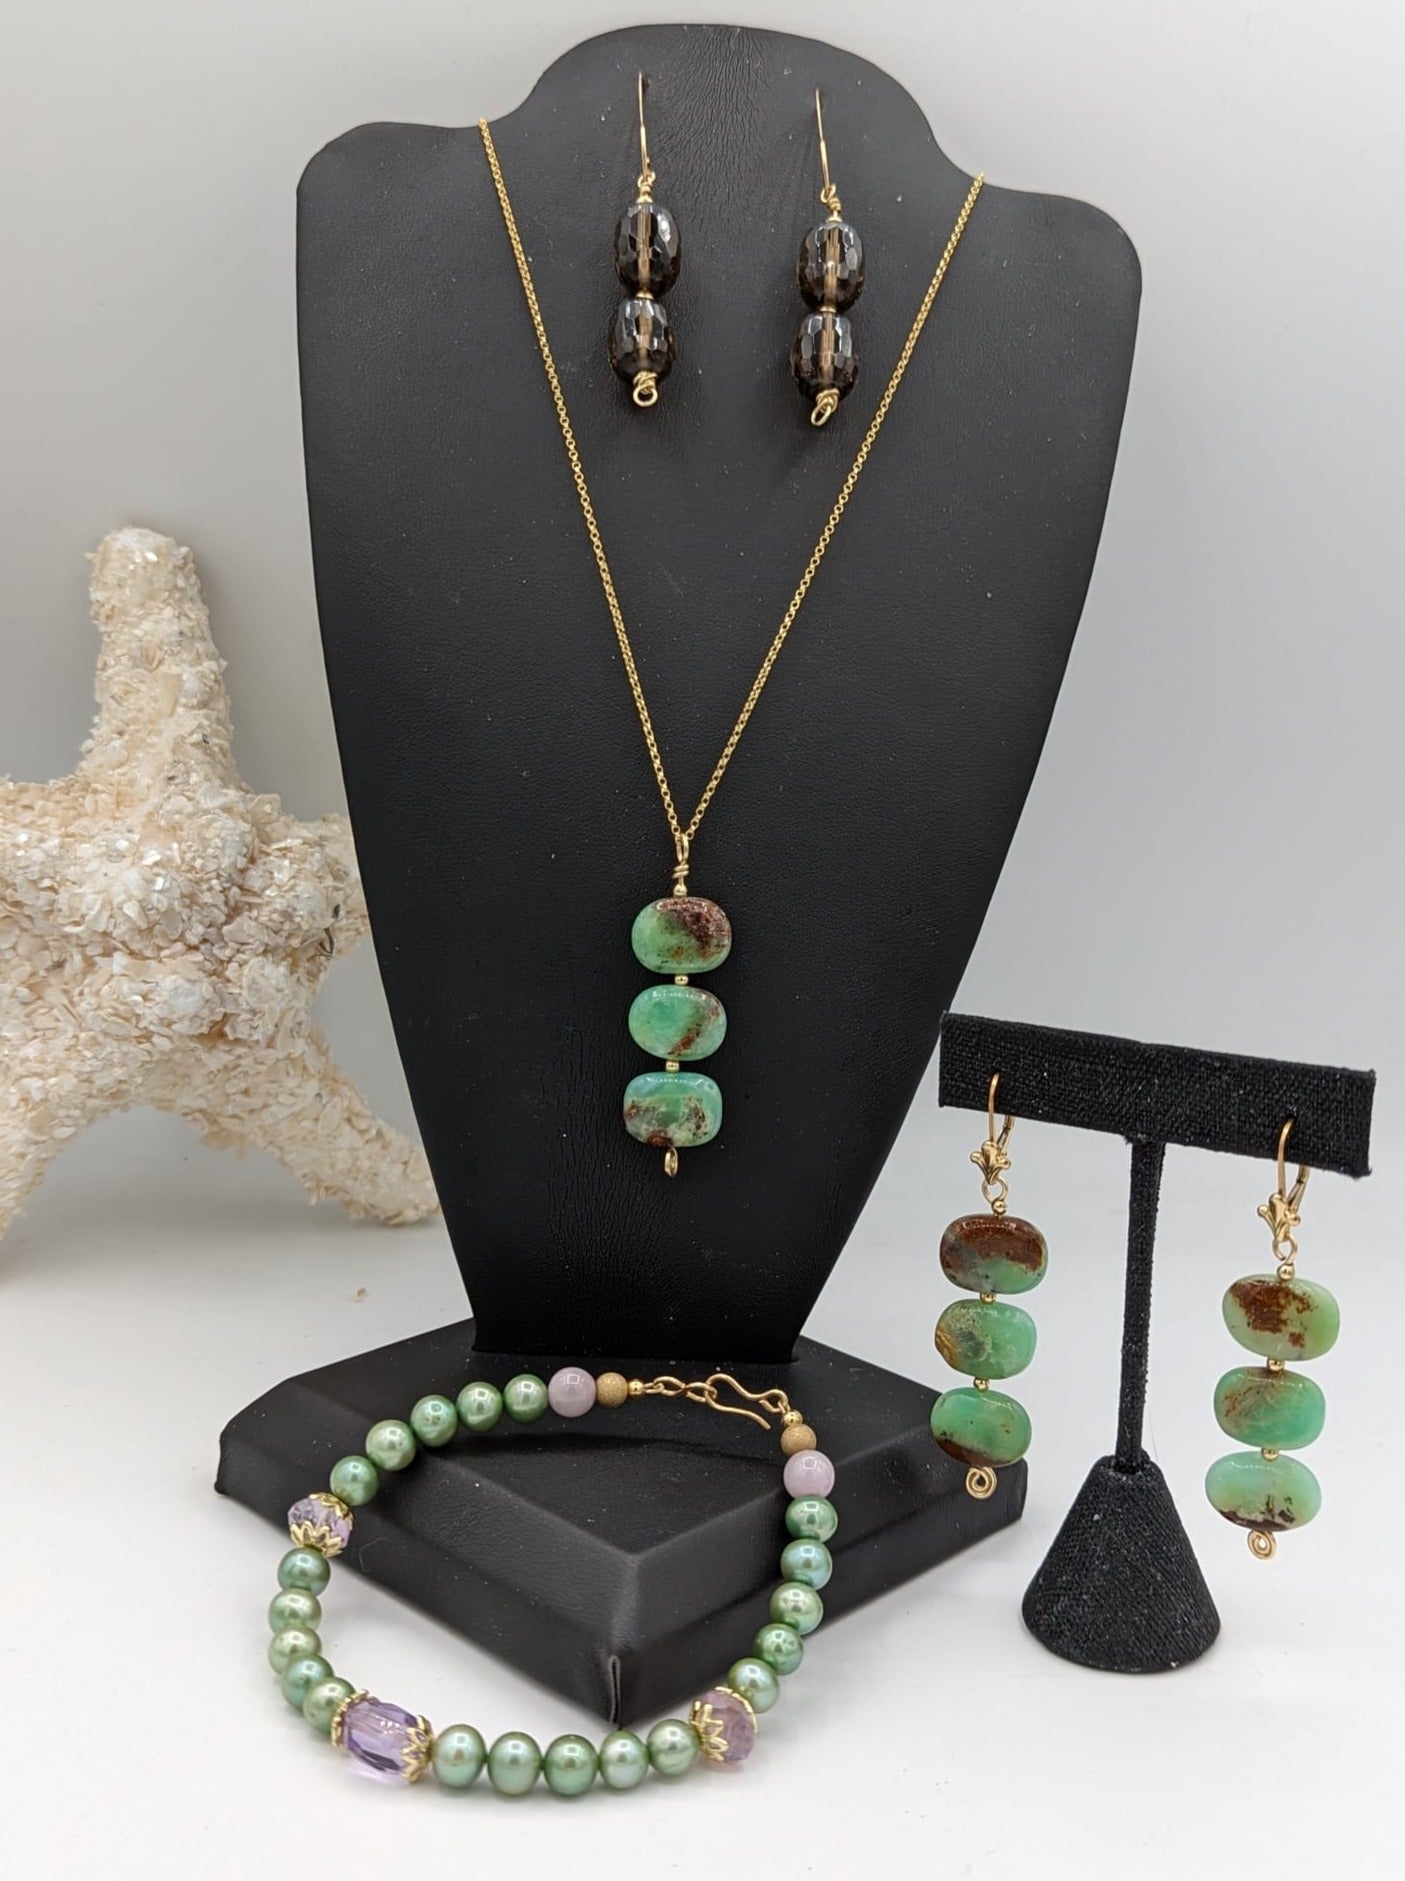 Chyrosaprase Pendant styled with chyrosaprase earrings and GF smokey quartz earrings and green pearl bracelet